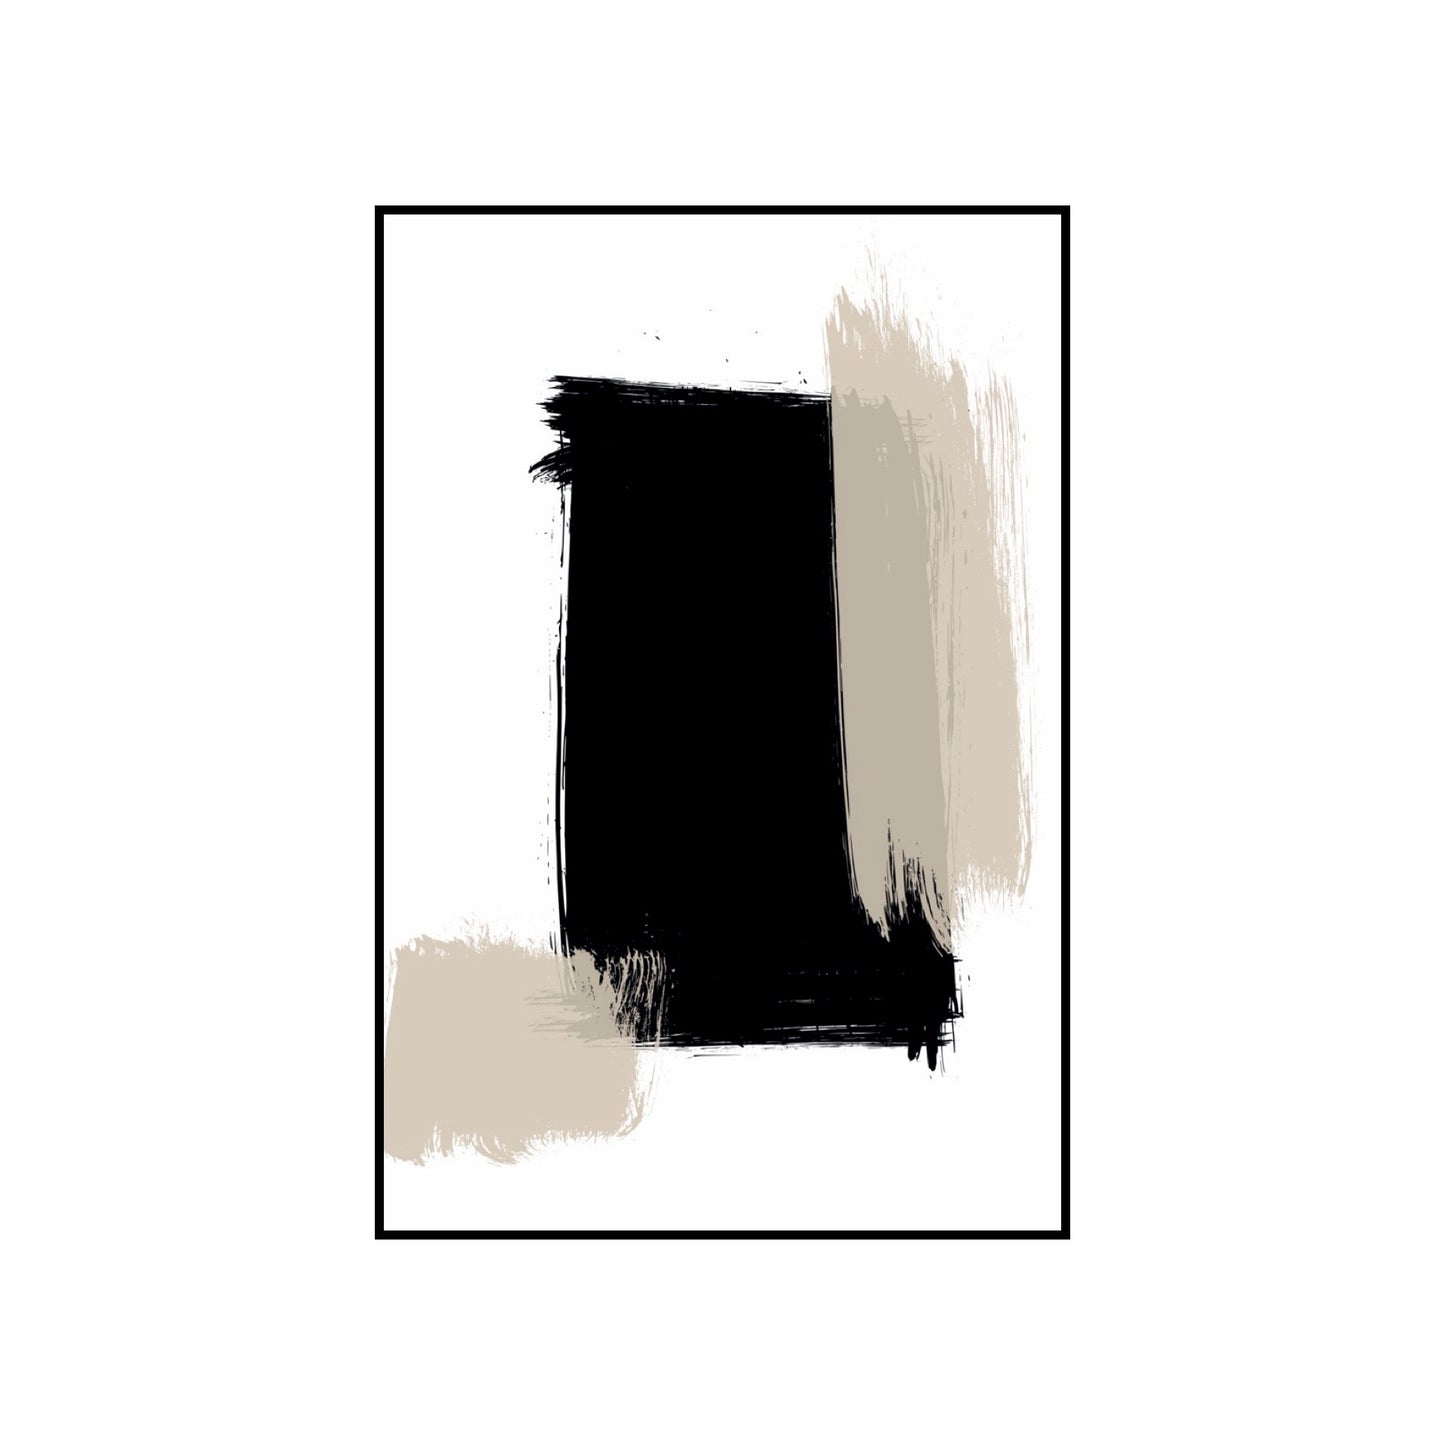 Beige and black brush strokes